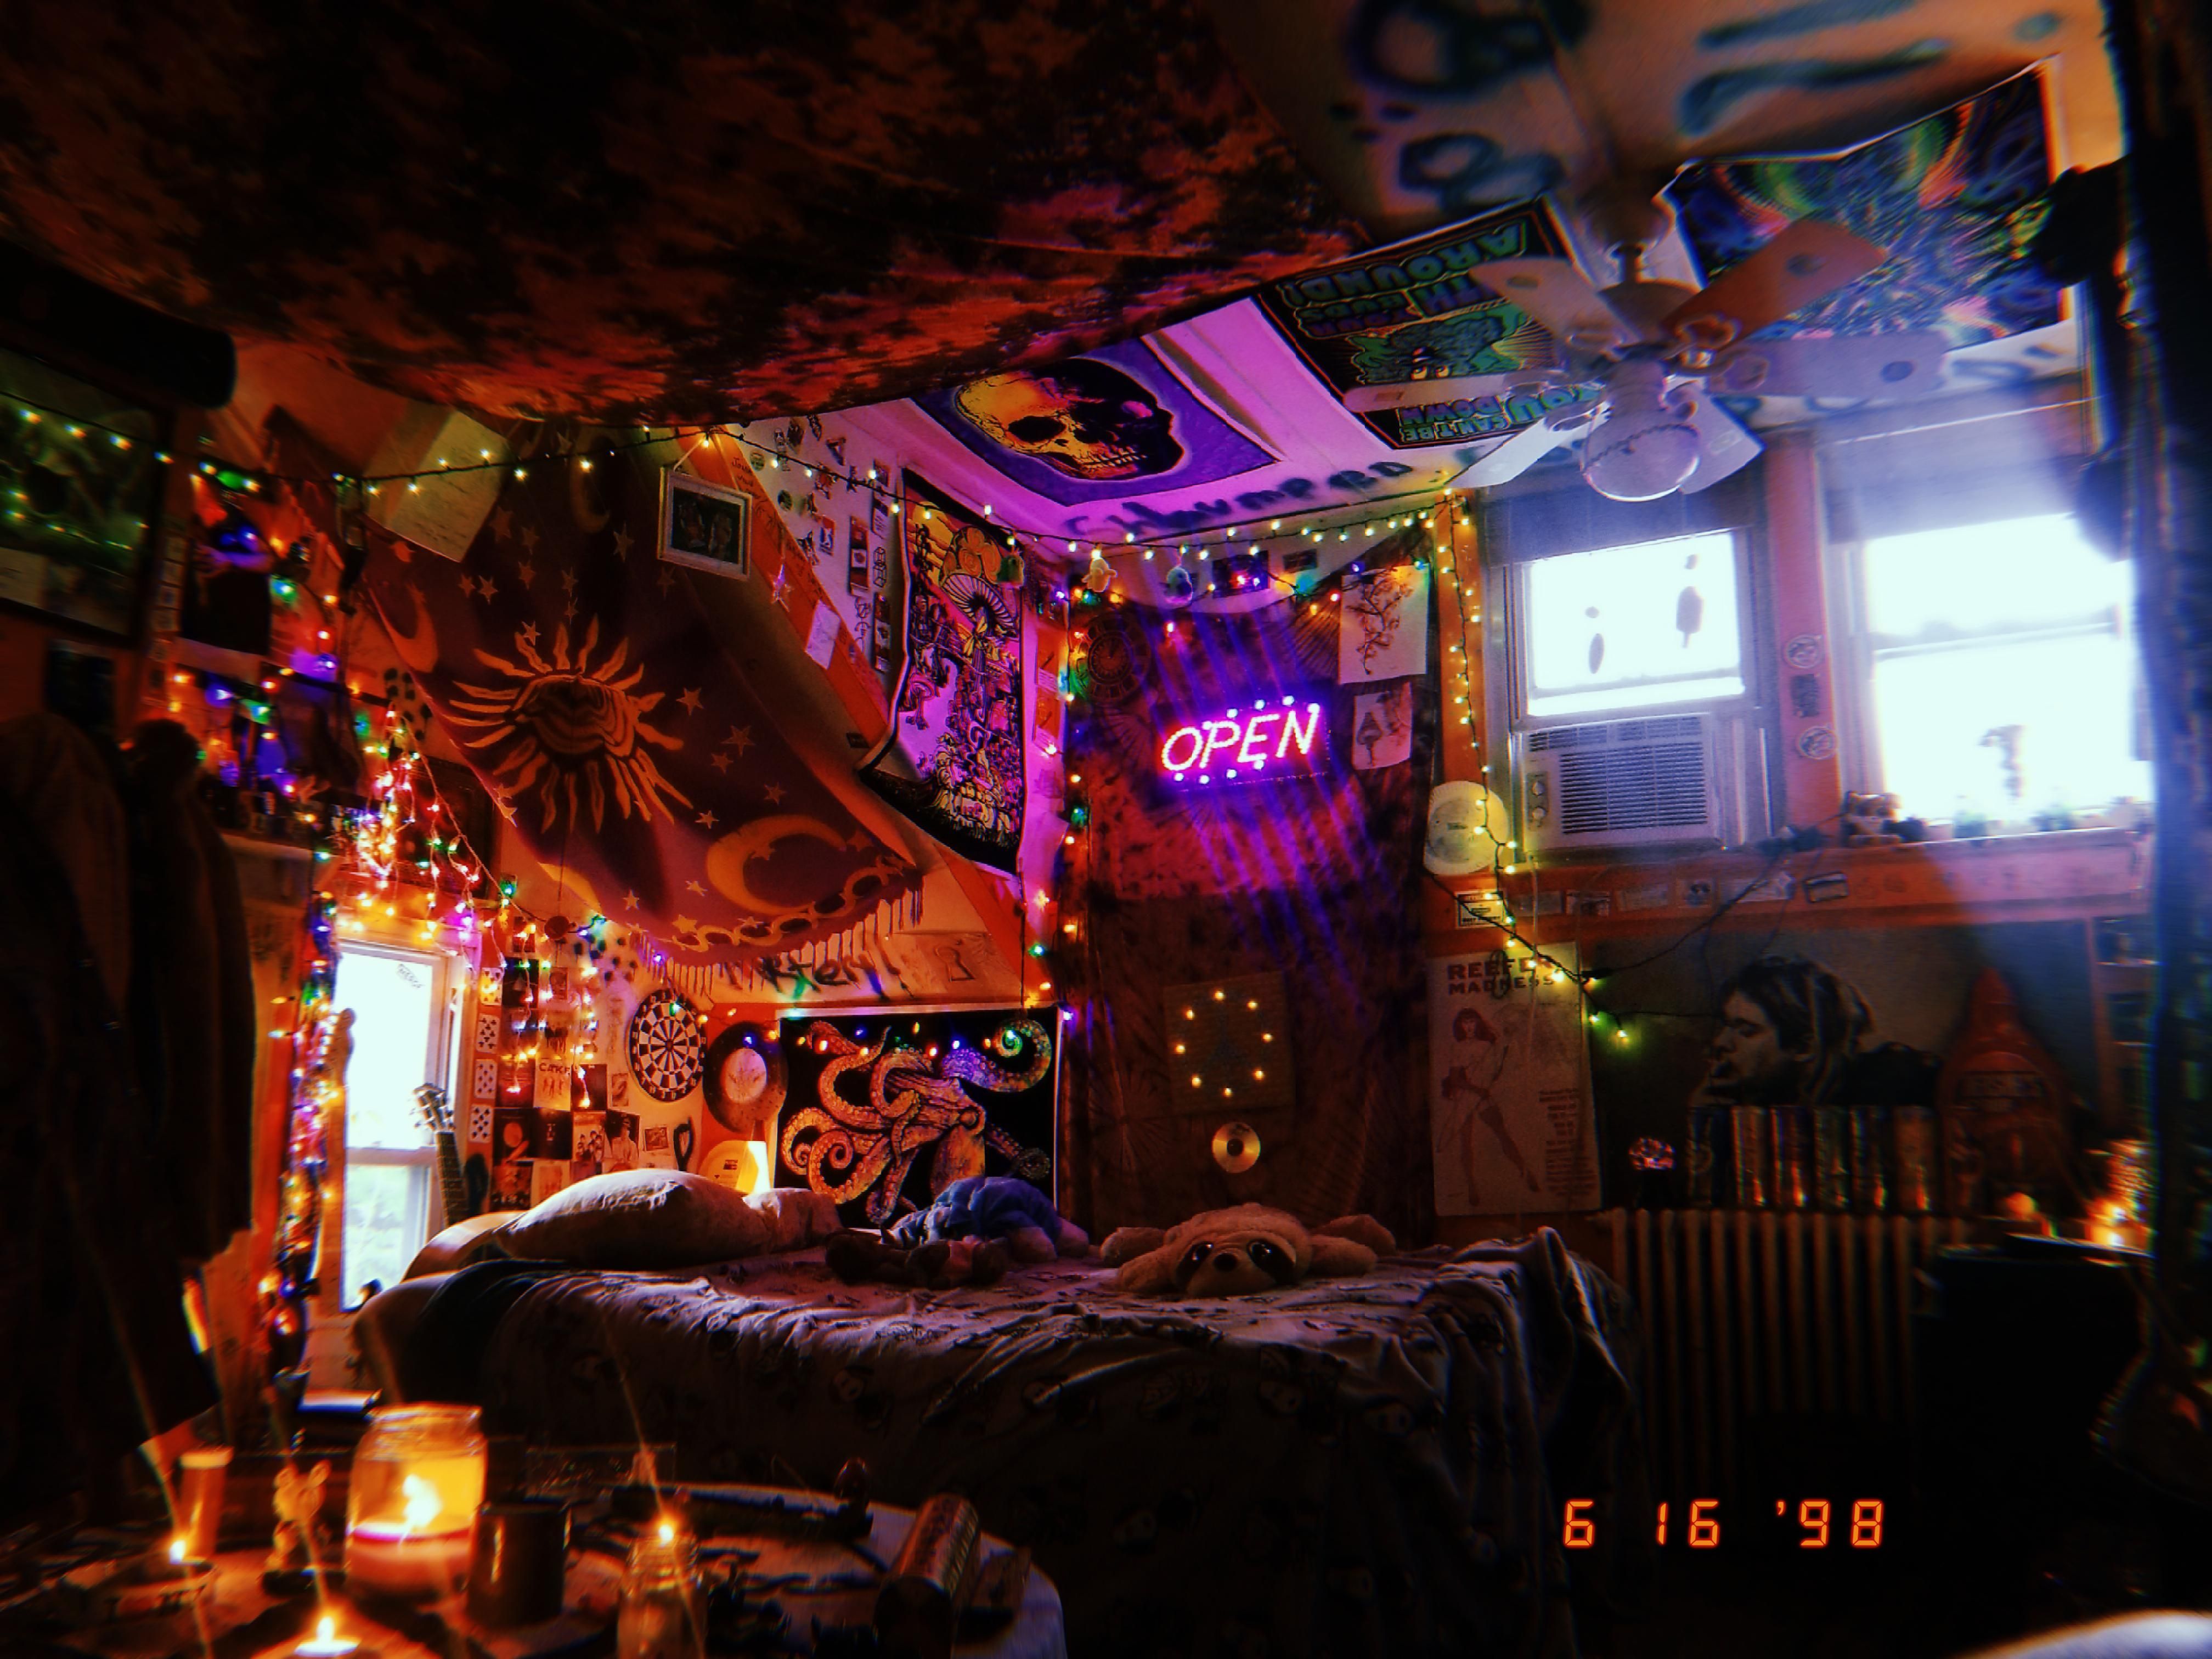 My trippy room -   13 room decor Hippie nature ideas